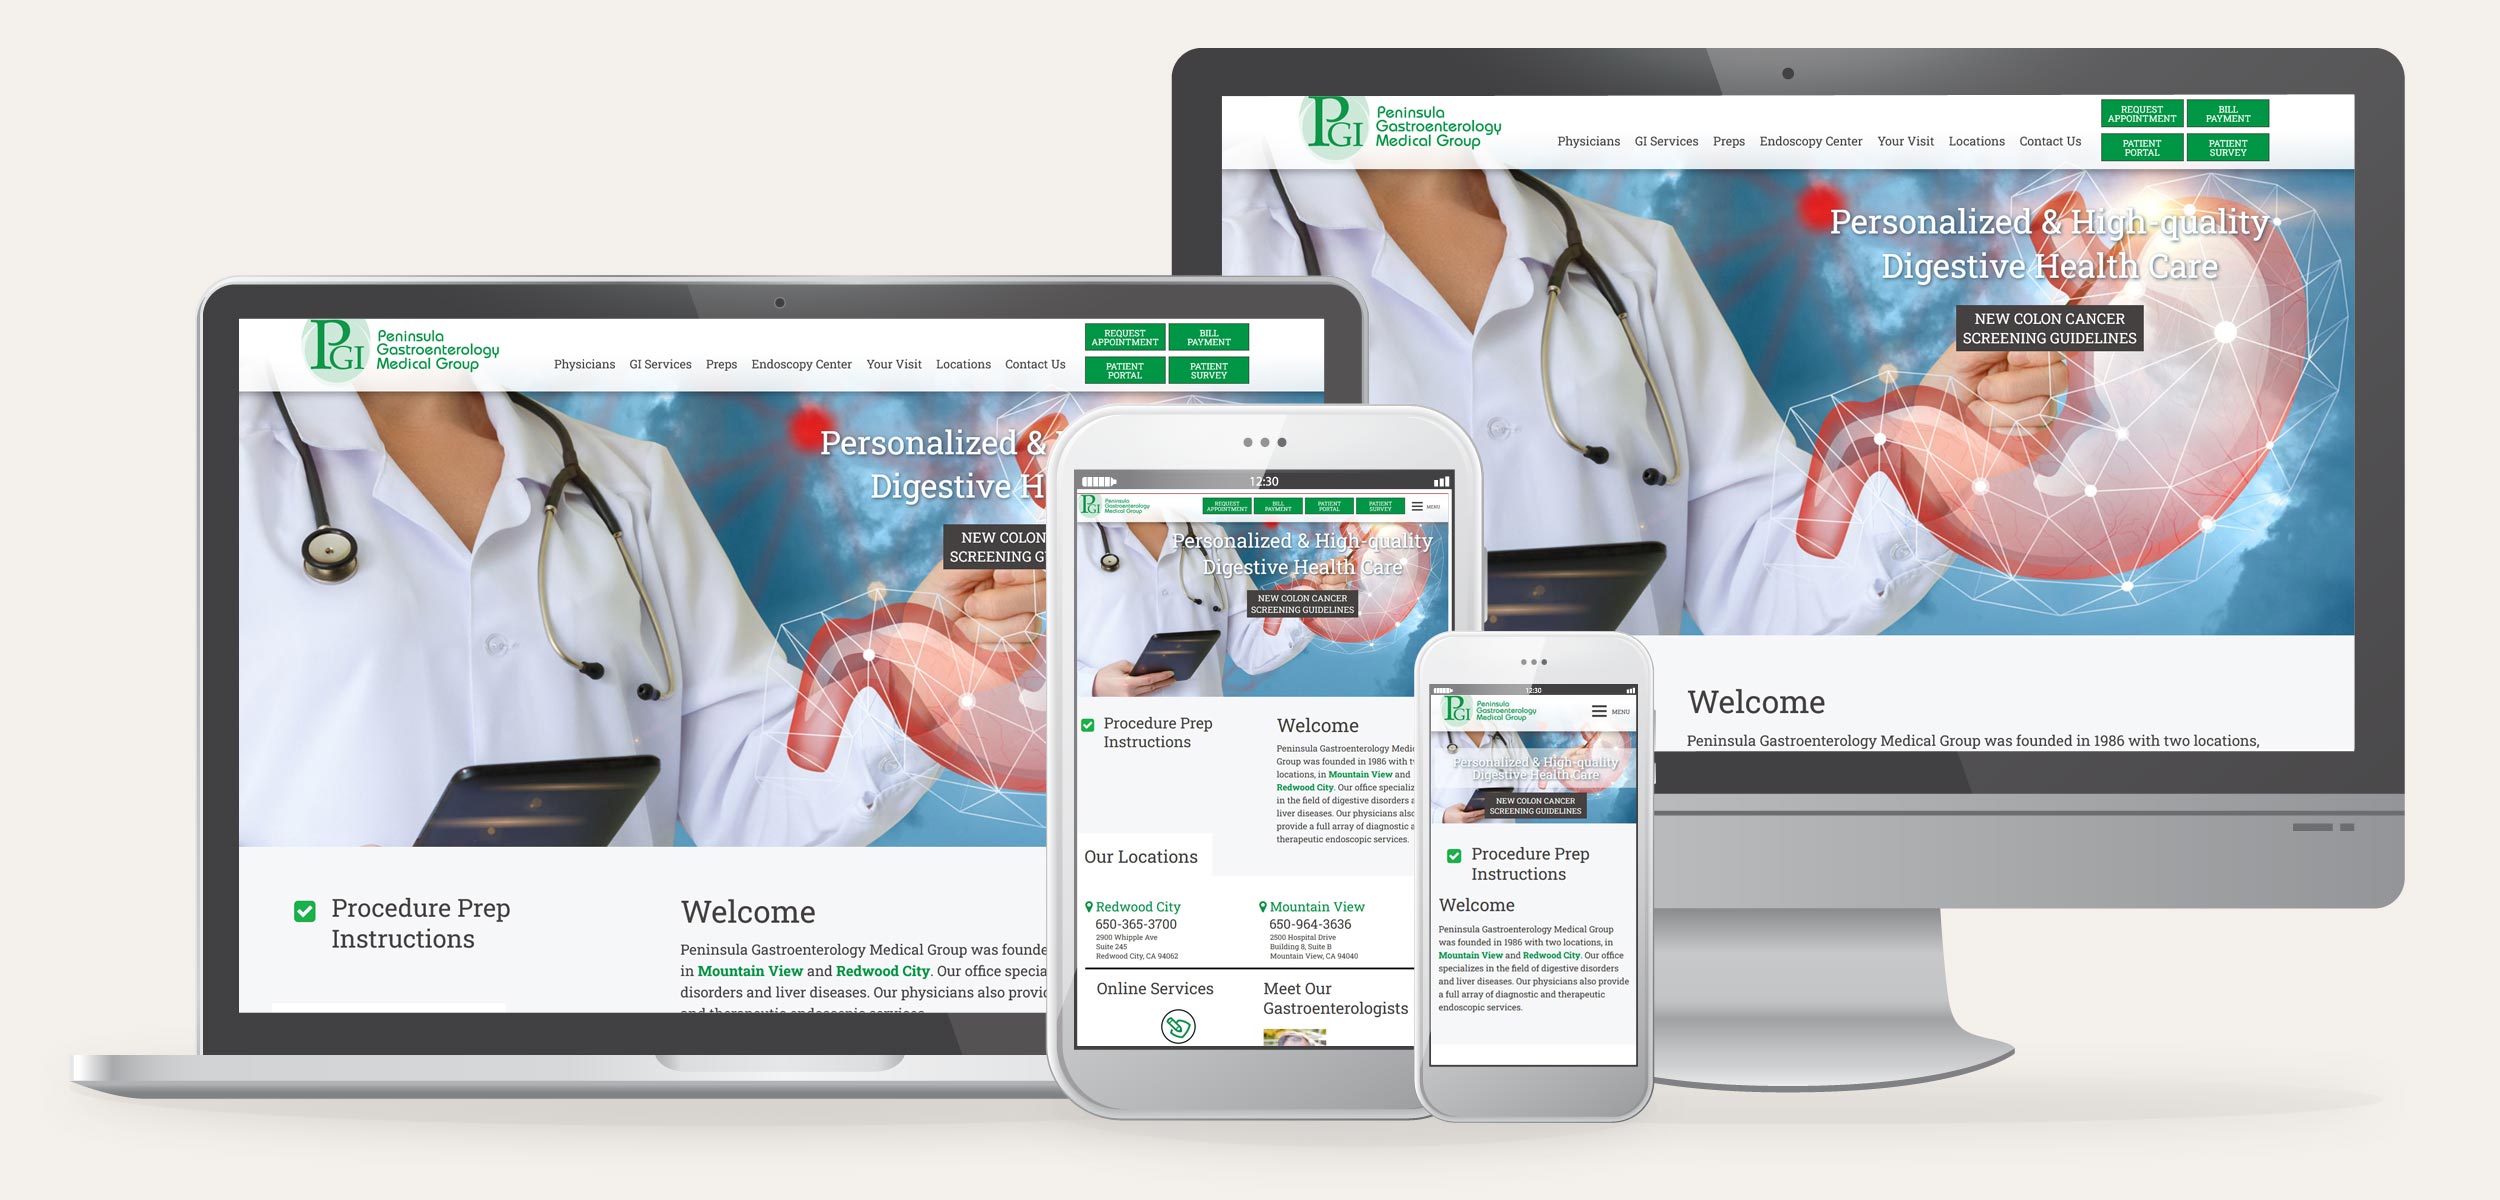 MMA developed the website for Peninsula Gastroenterology Medical Group